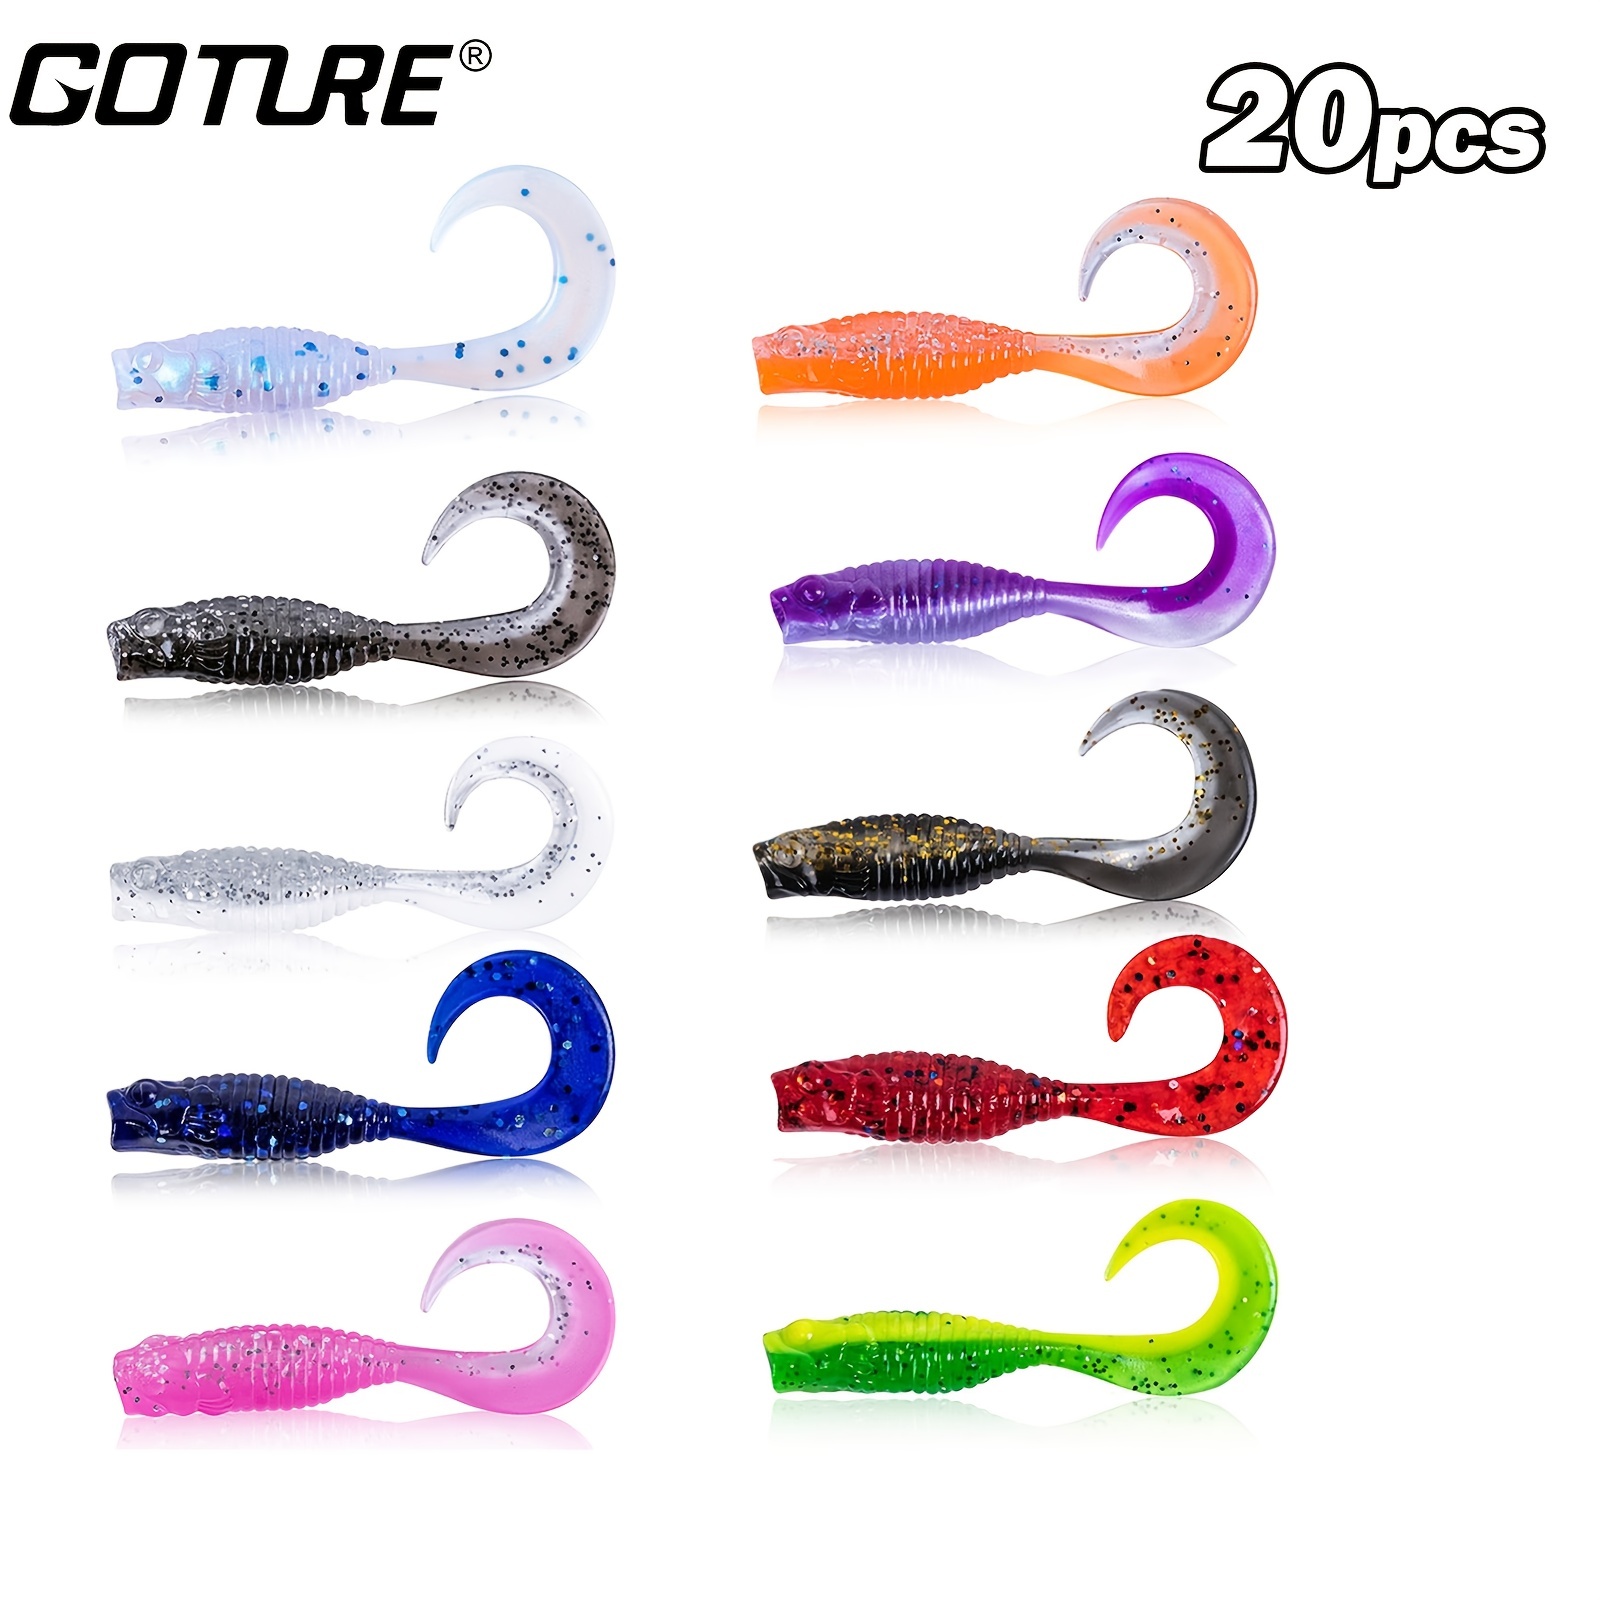  Goture Soft Fishing Lures 20 Pcs,PVC Swimbaits For